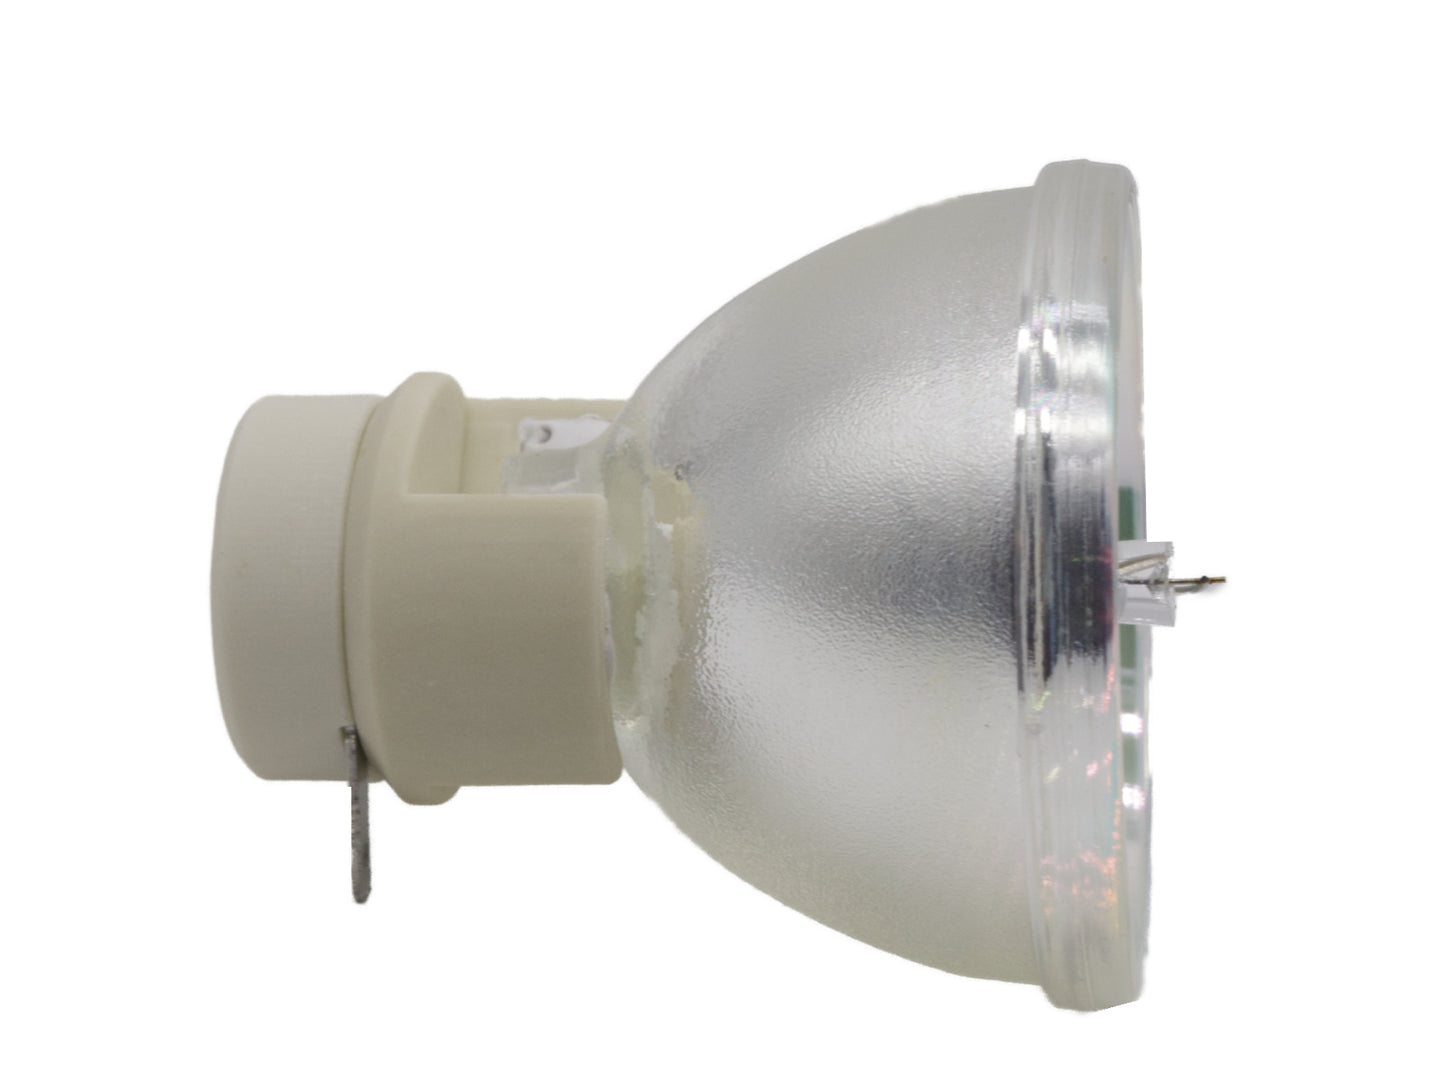 azurano Beamerlampe für ACER EC.J9300.001 Ersatzlampe Projektorlampe - Bild 3